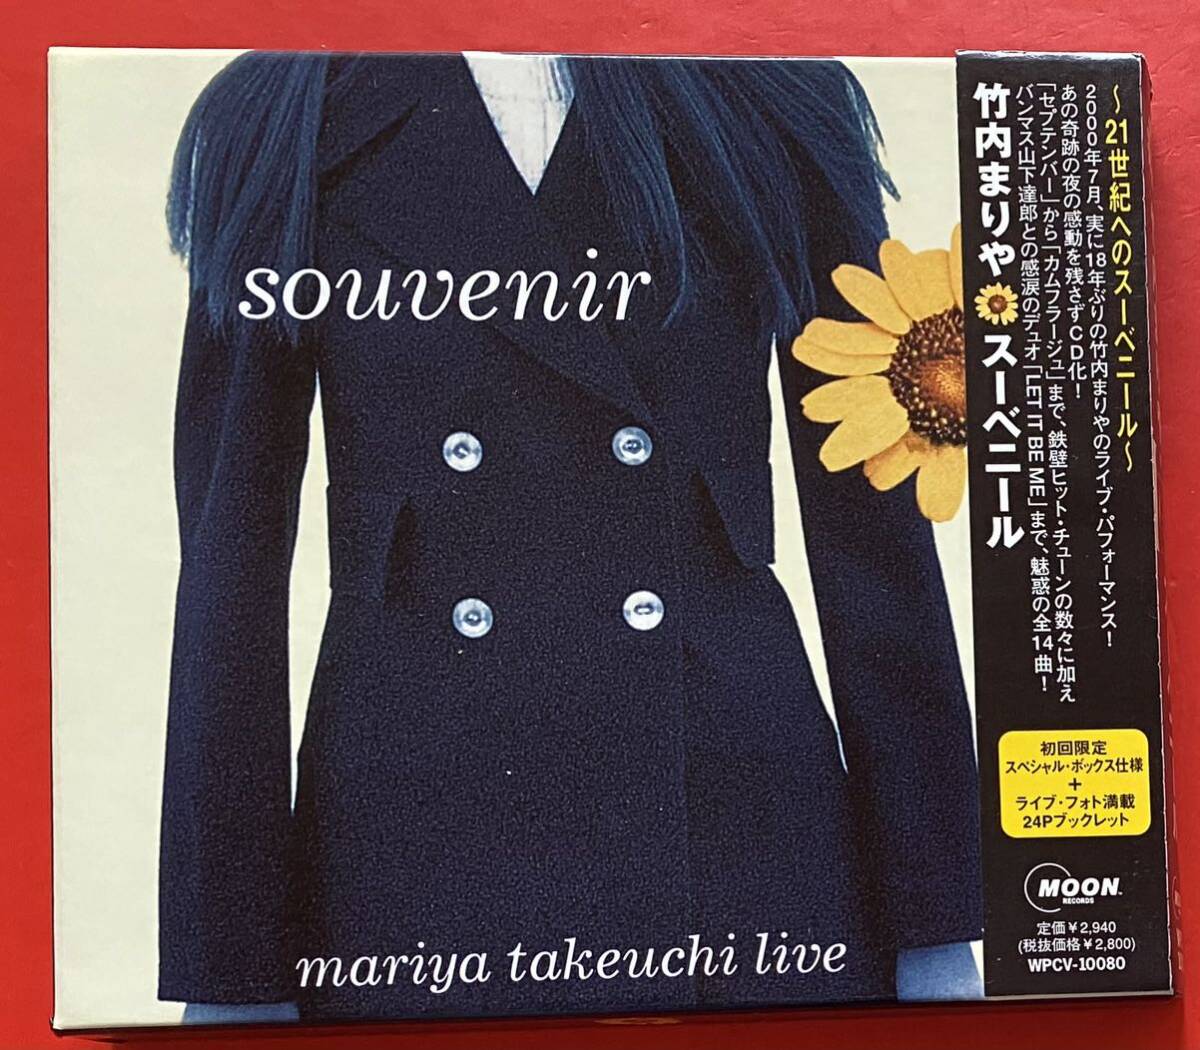 [CD] Takeuchi Mariya [ Hsu . Neal / Souvenir~Mariya Takeuchi Live] первый раз ограничение BOX specification [02210440]